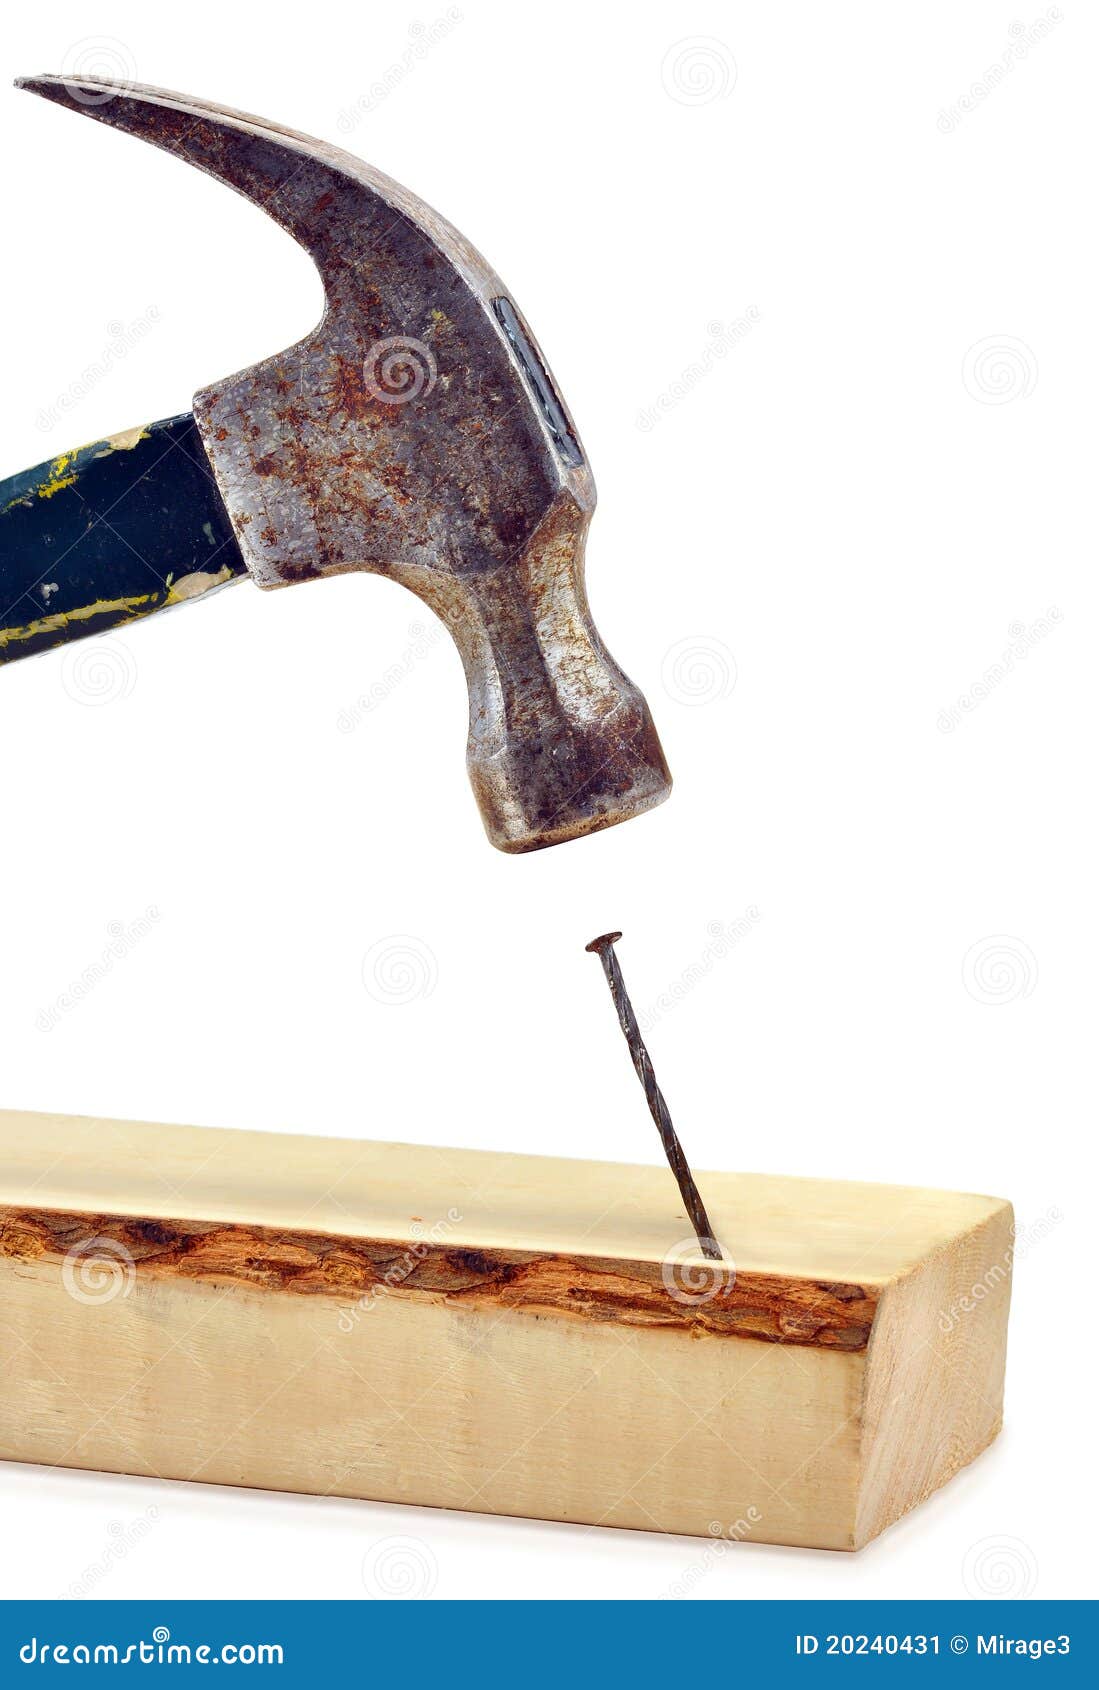 Home Improvement Tip: Enhance Your Hammer Grip